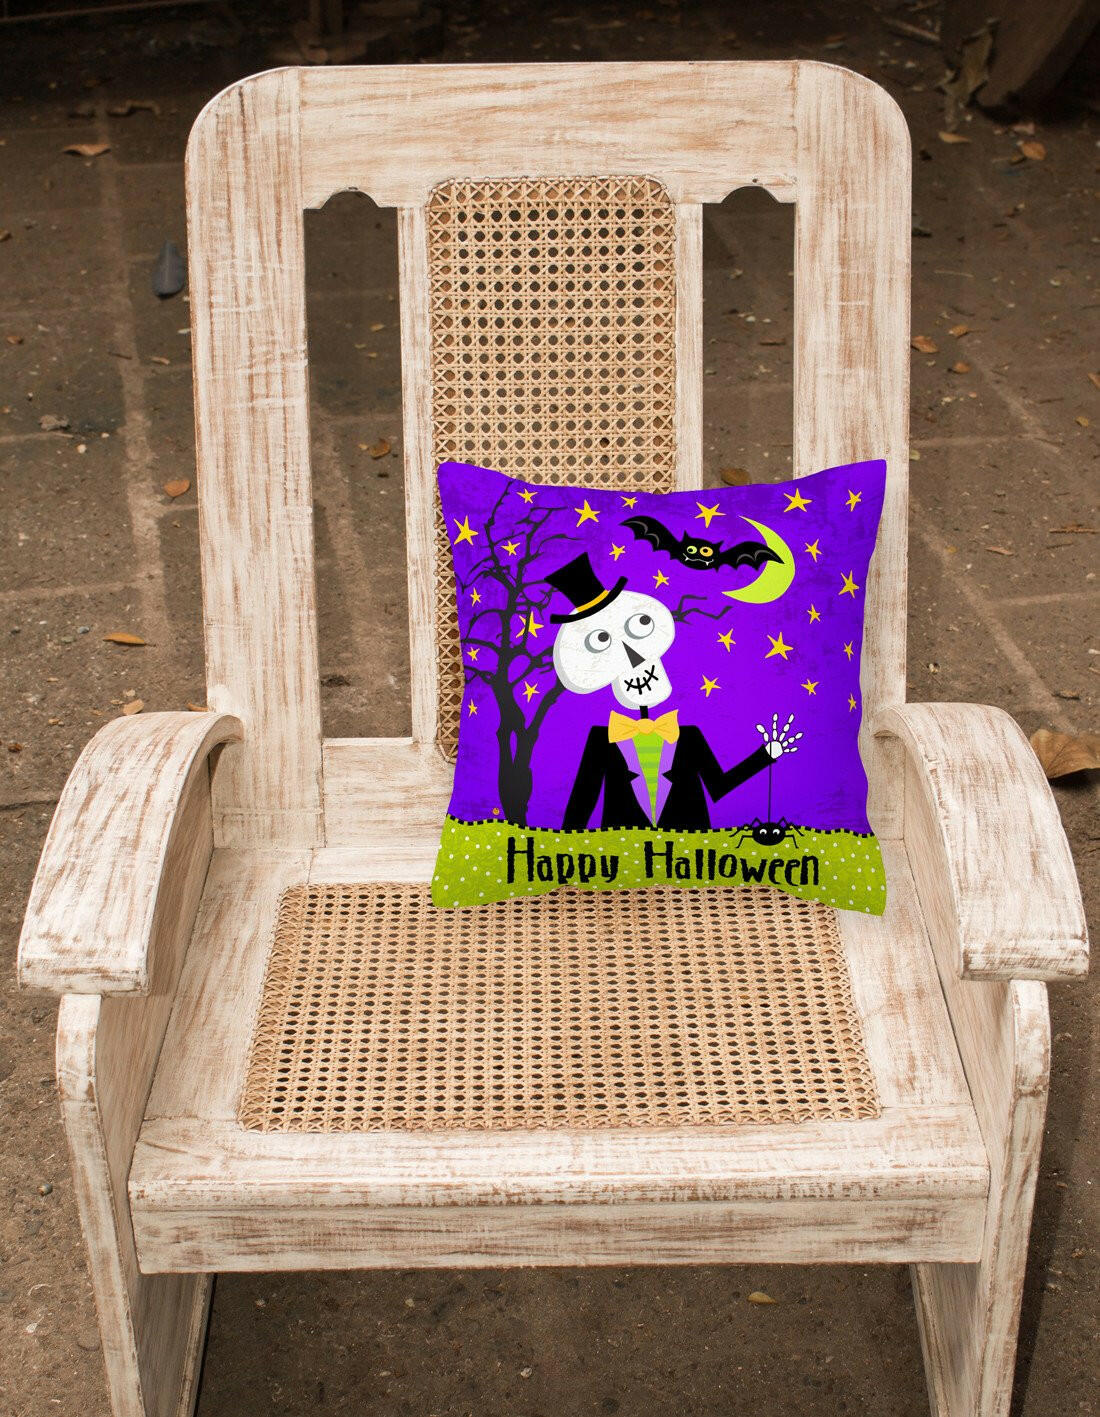 Happy Halloween Skeleton Fabric Decorative Pillow VHA3014PW1414 by Caroline's Treasures